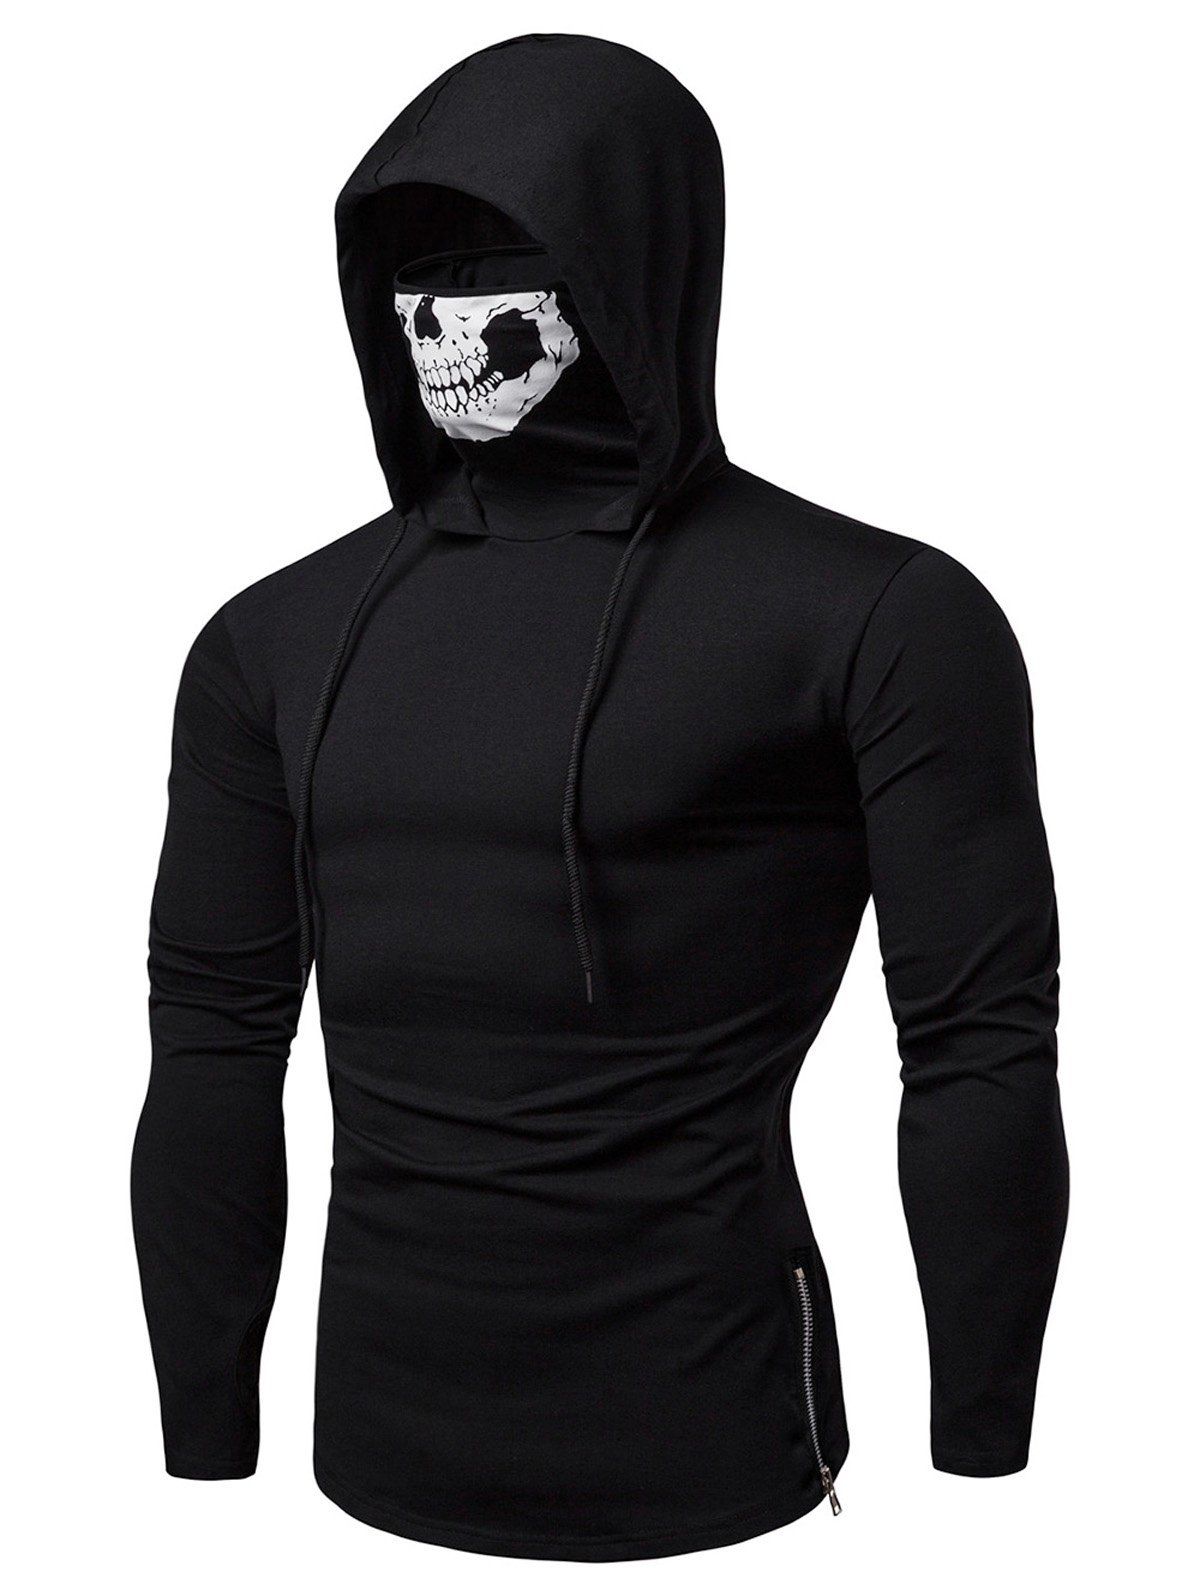 Skull Mask Drawstring Zip Hem Hooded T Shirt - BLACK M